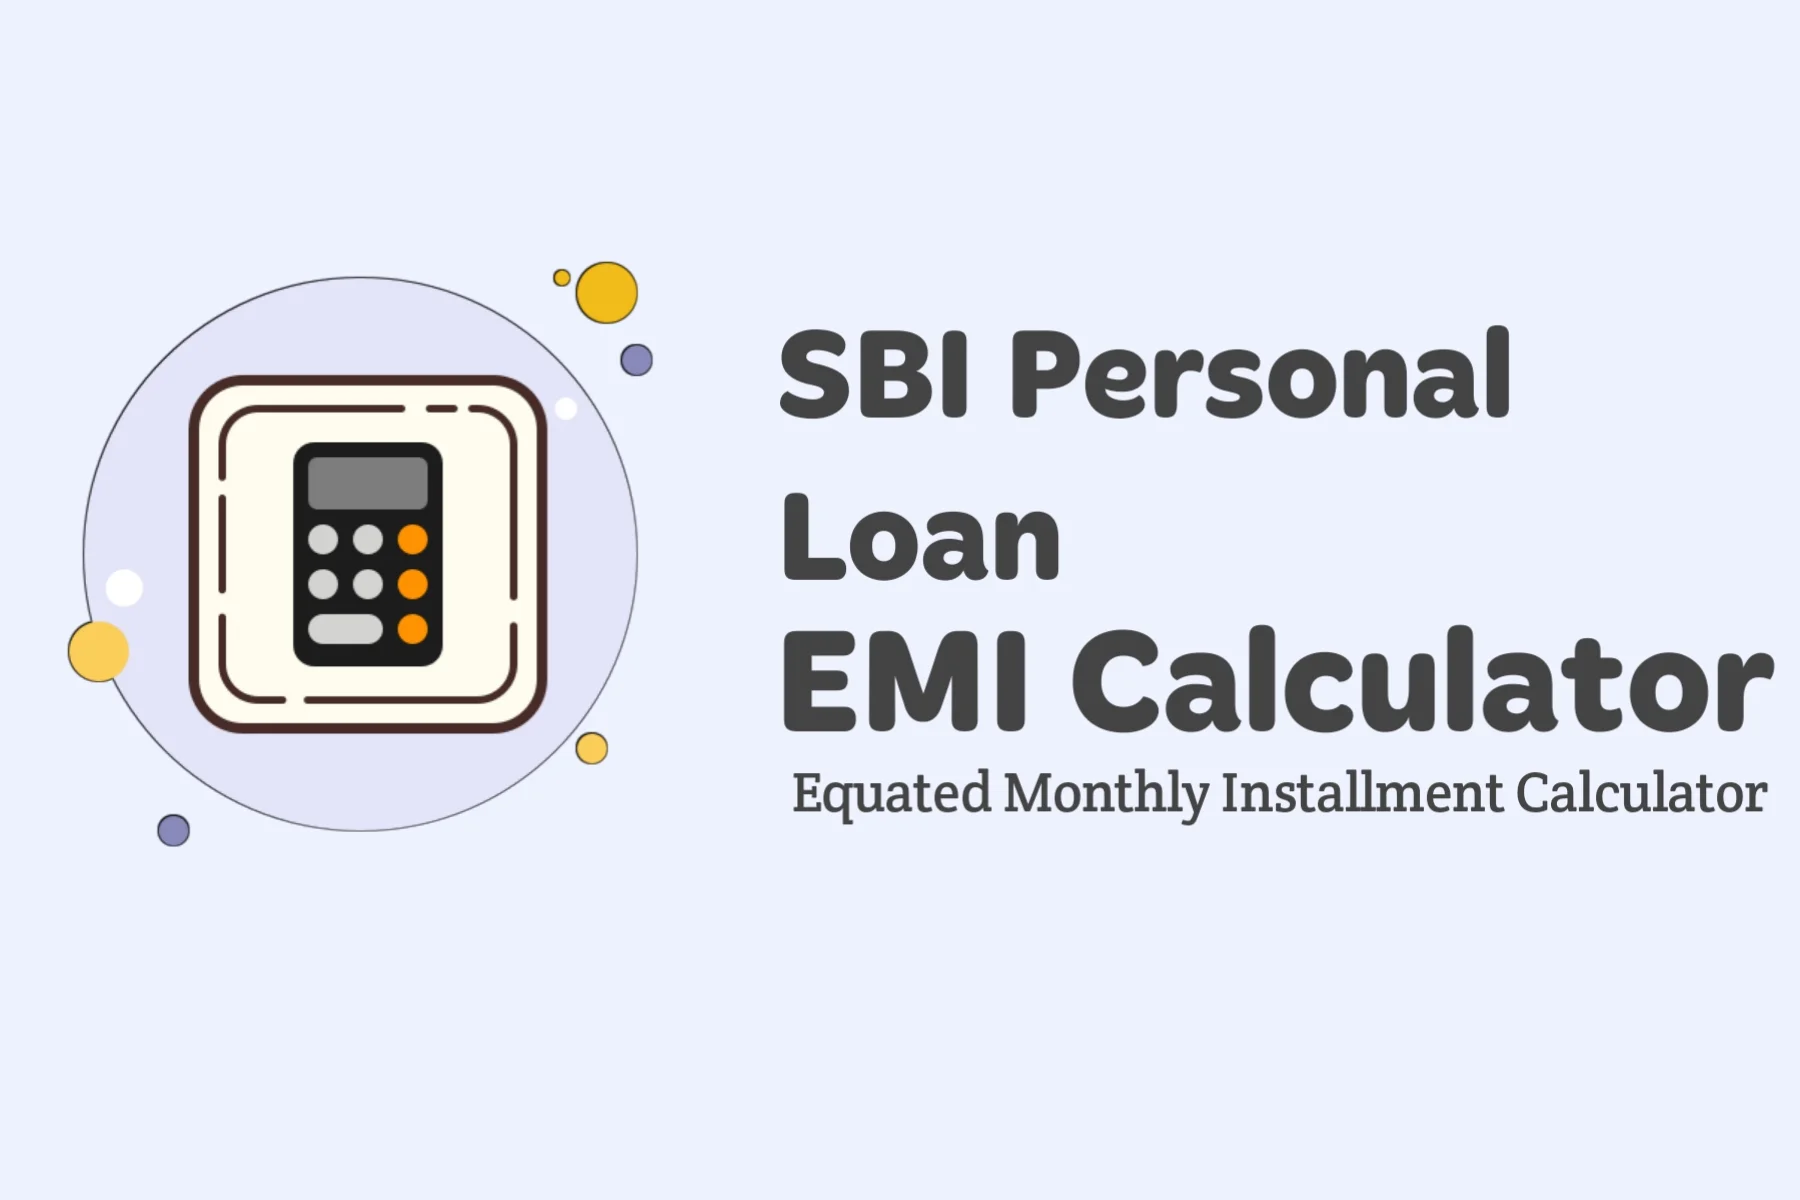 SBI Personal Loan EMI Calculator